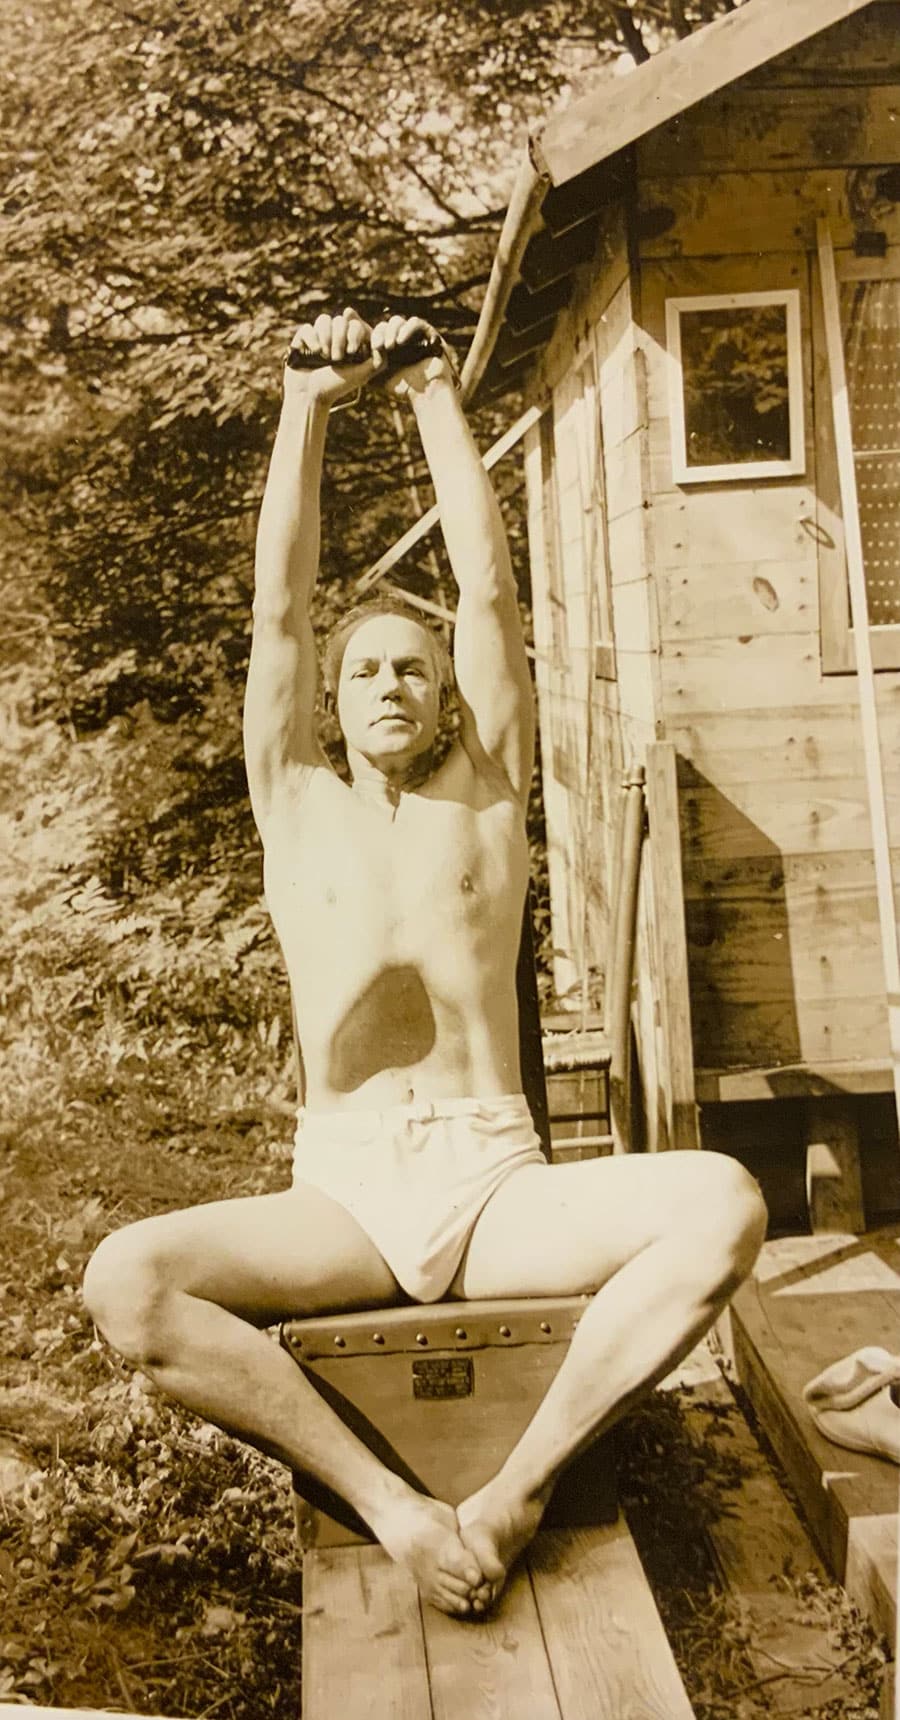 Ted Shawn pilates wunda chair archive photo